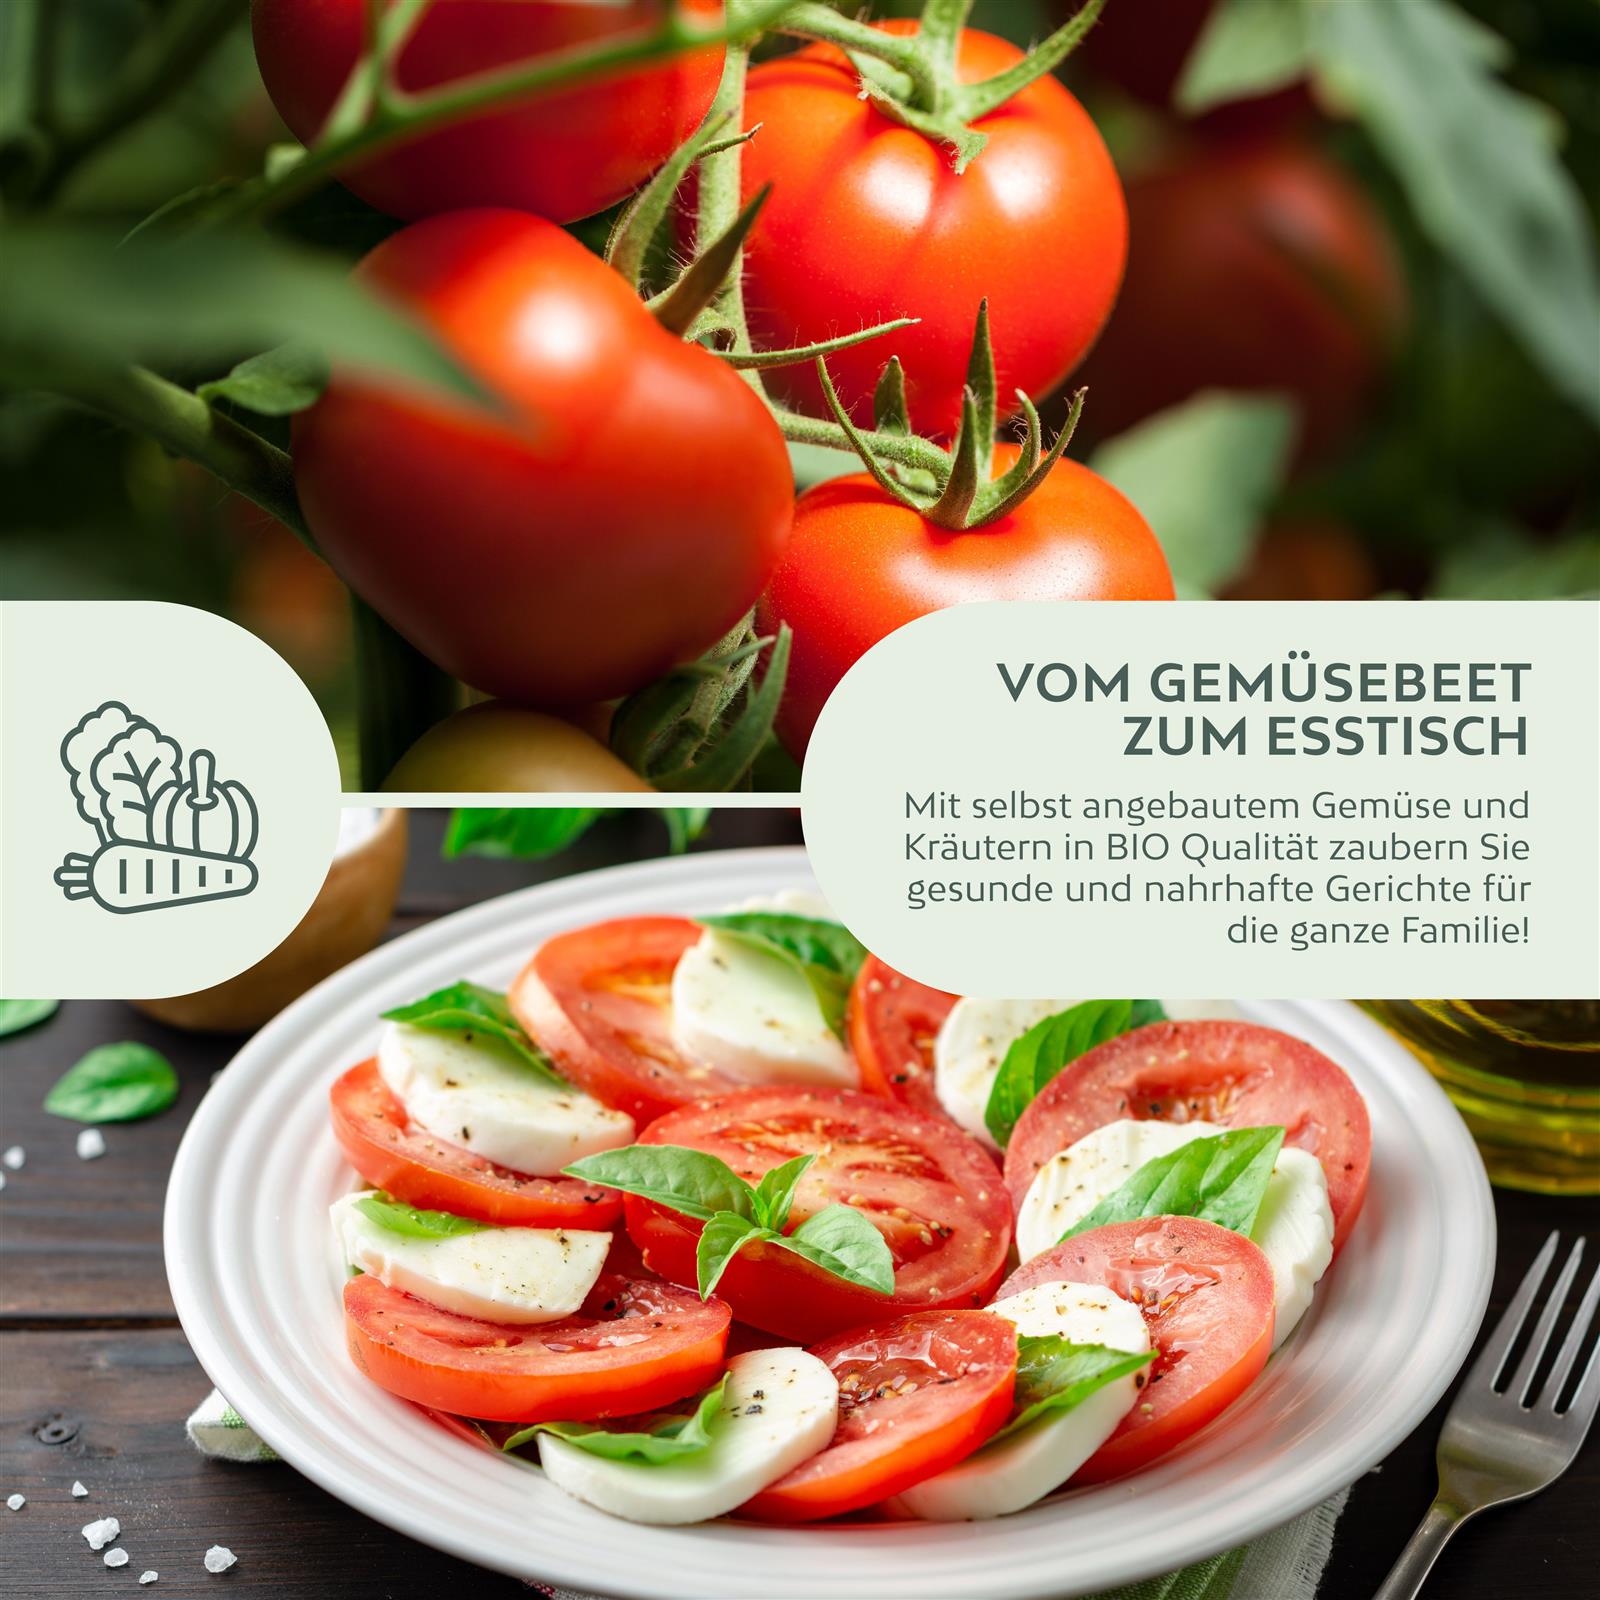 BIO Tomatensamen (Matina) - Tomaten Saatgut aus biologischem Anbau (10 Korn)